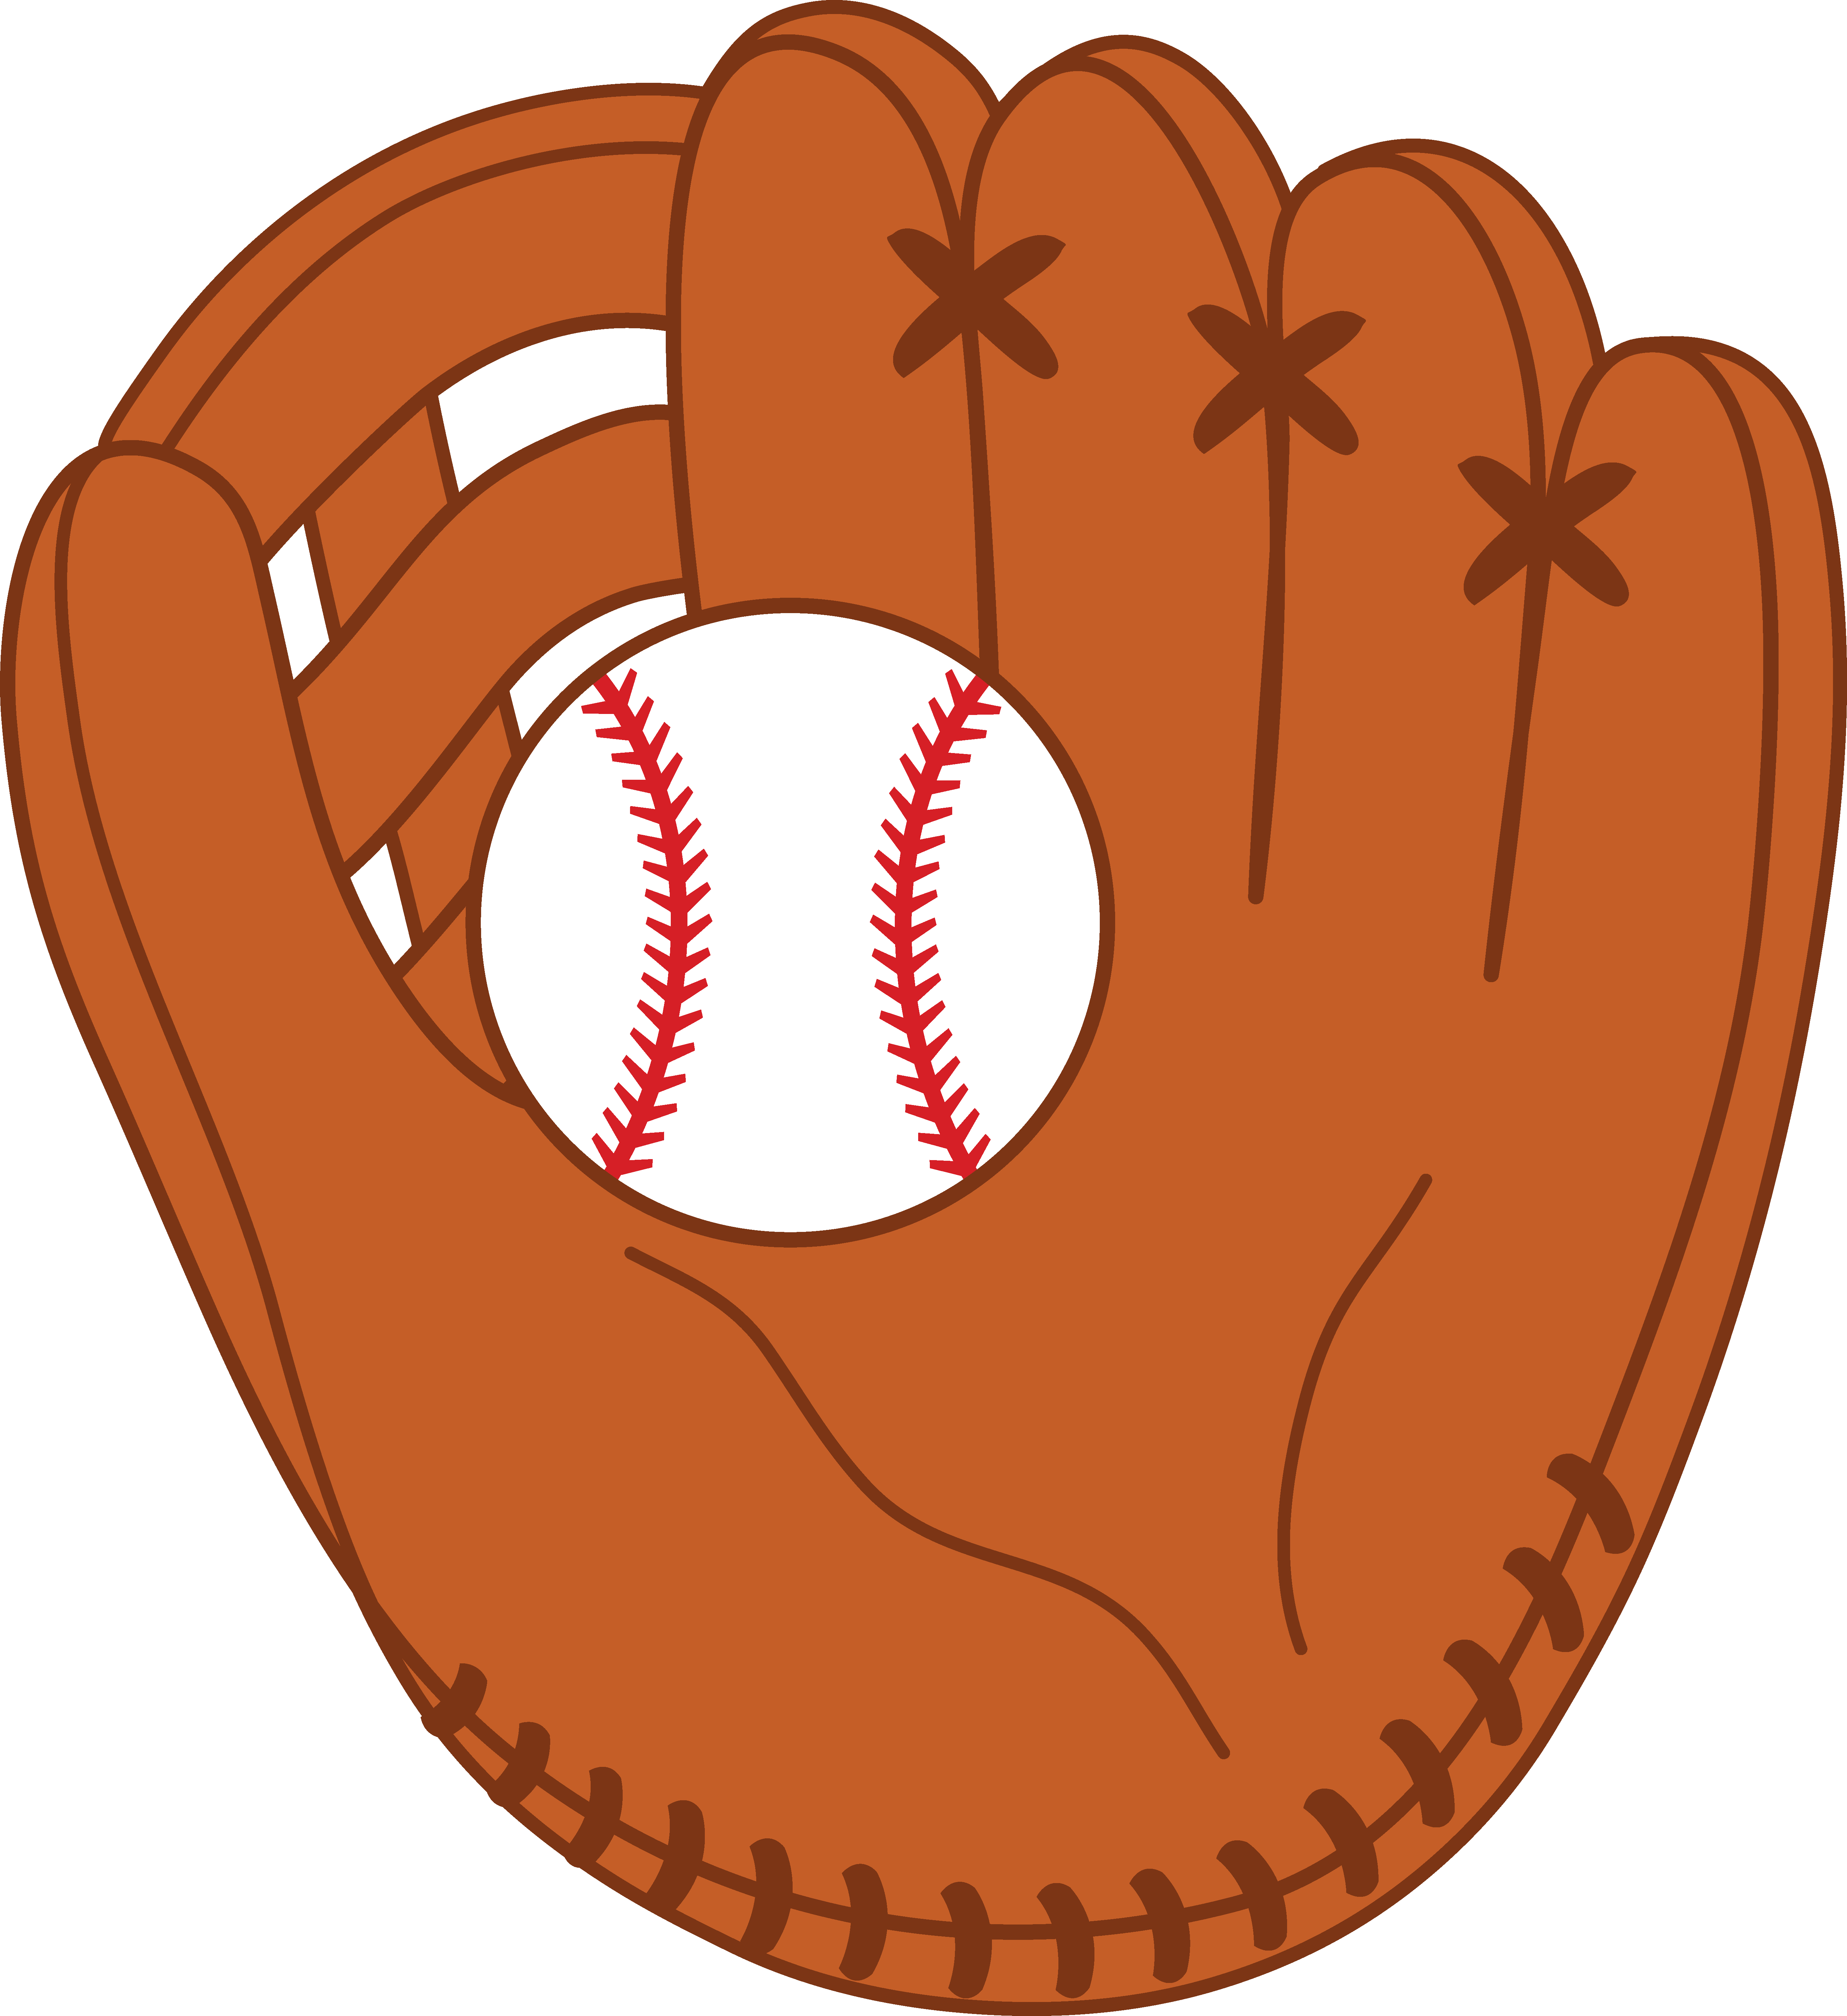 Baseball clip art free. Handshake clipart brotherhood